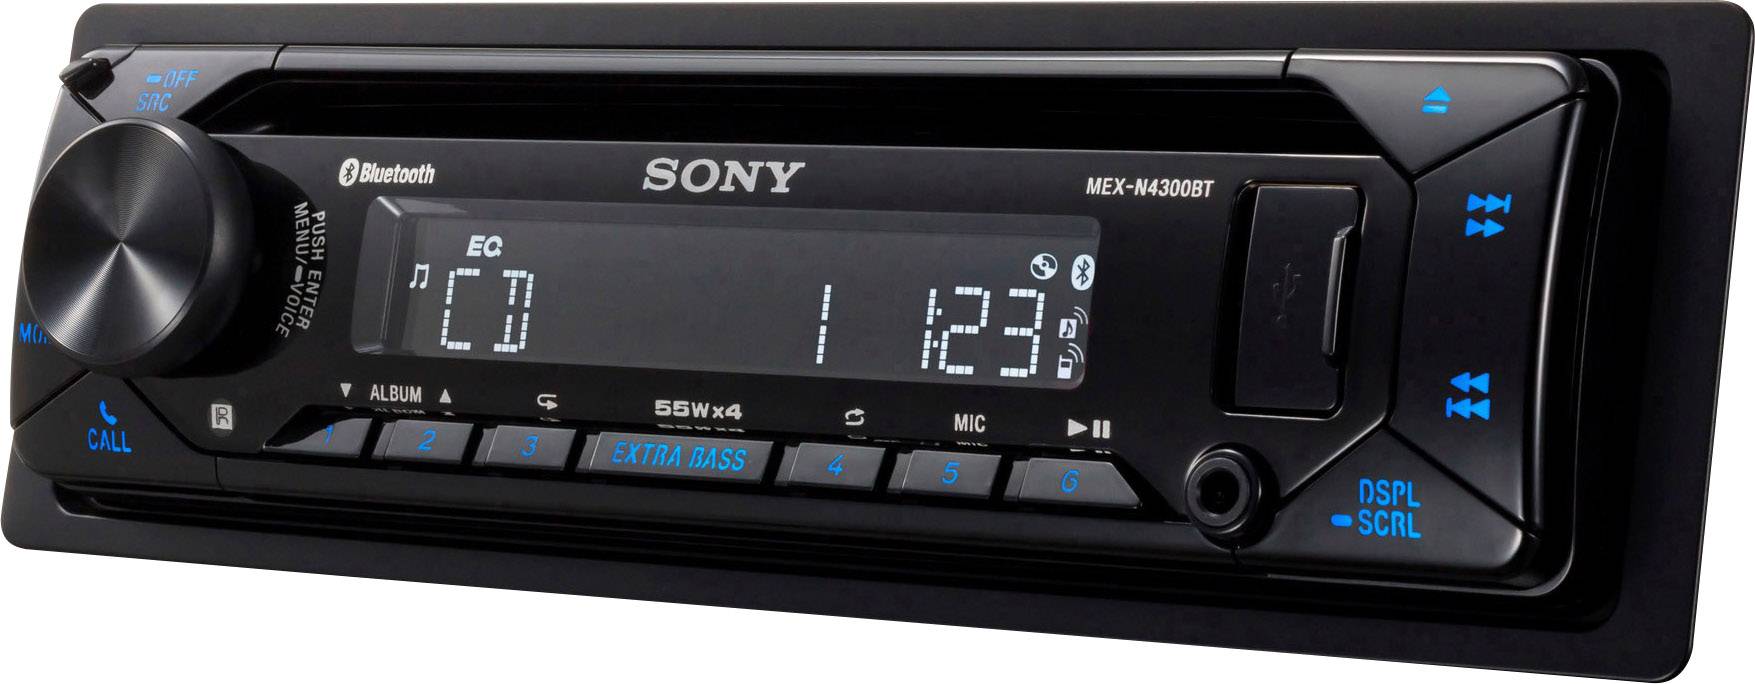 Peugeot Bipper CD player Sony MEX-N4200BT car radio Bluetooth Handsfree USB AUX 